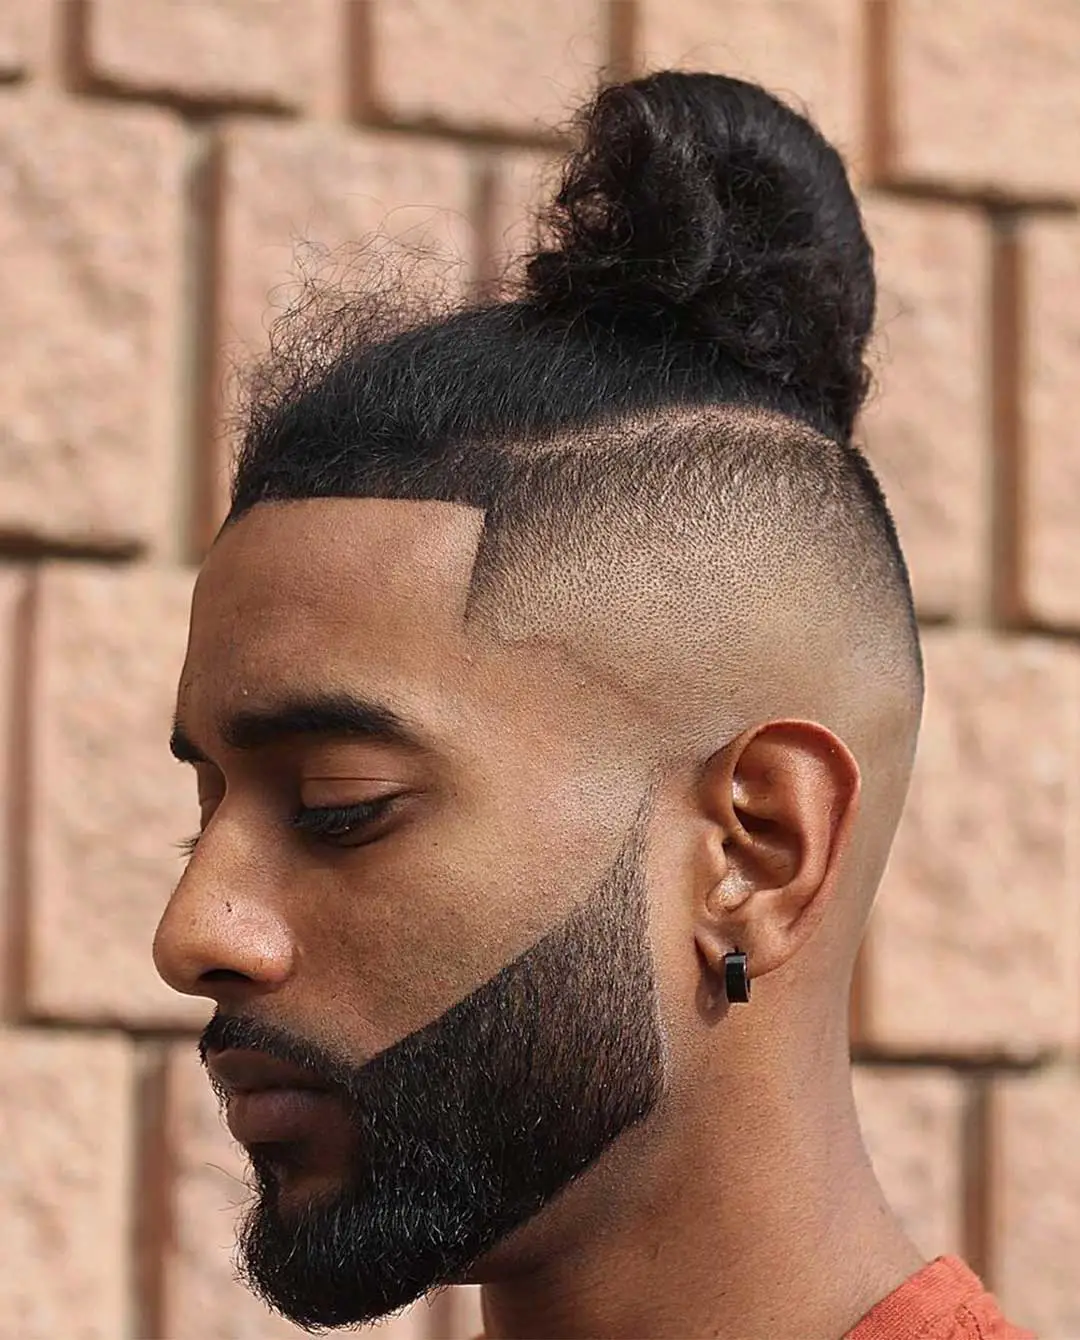 Top 10 Man Bun Haircuts to Try in 2023